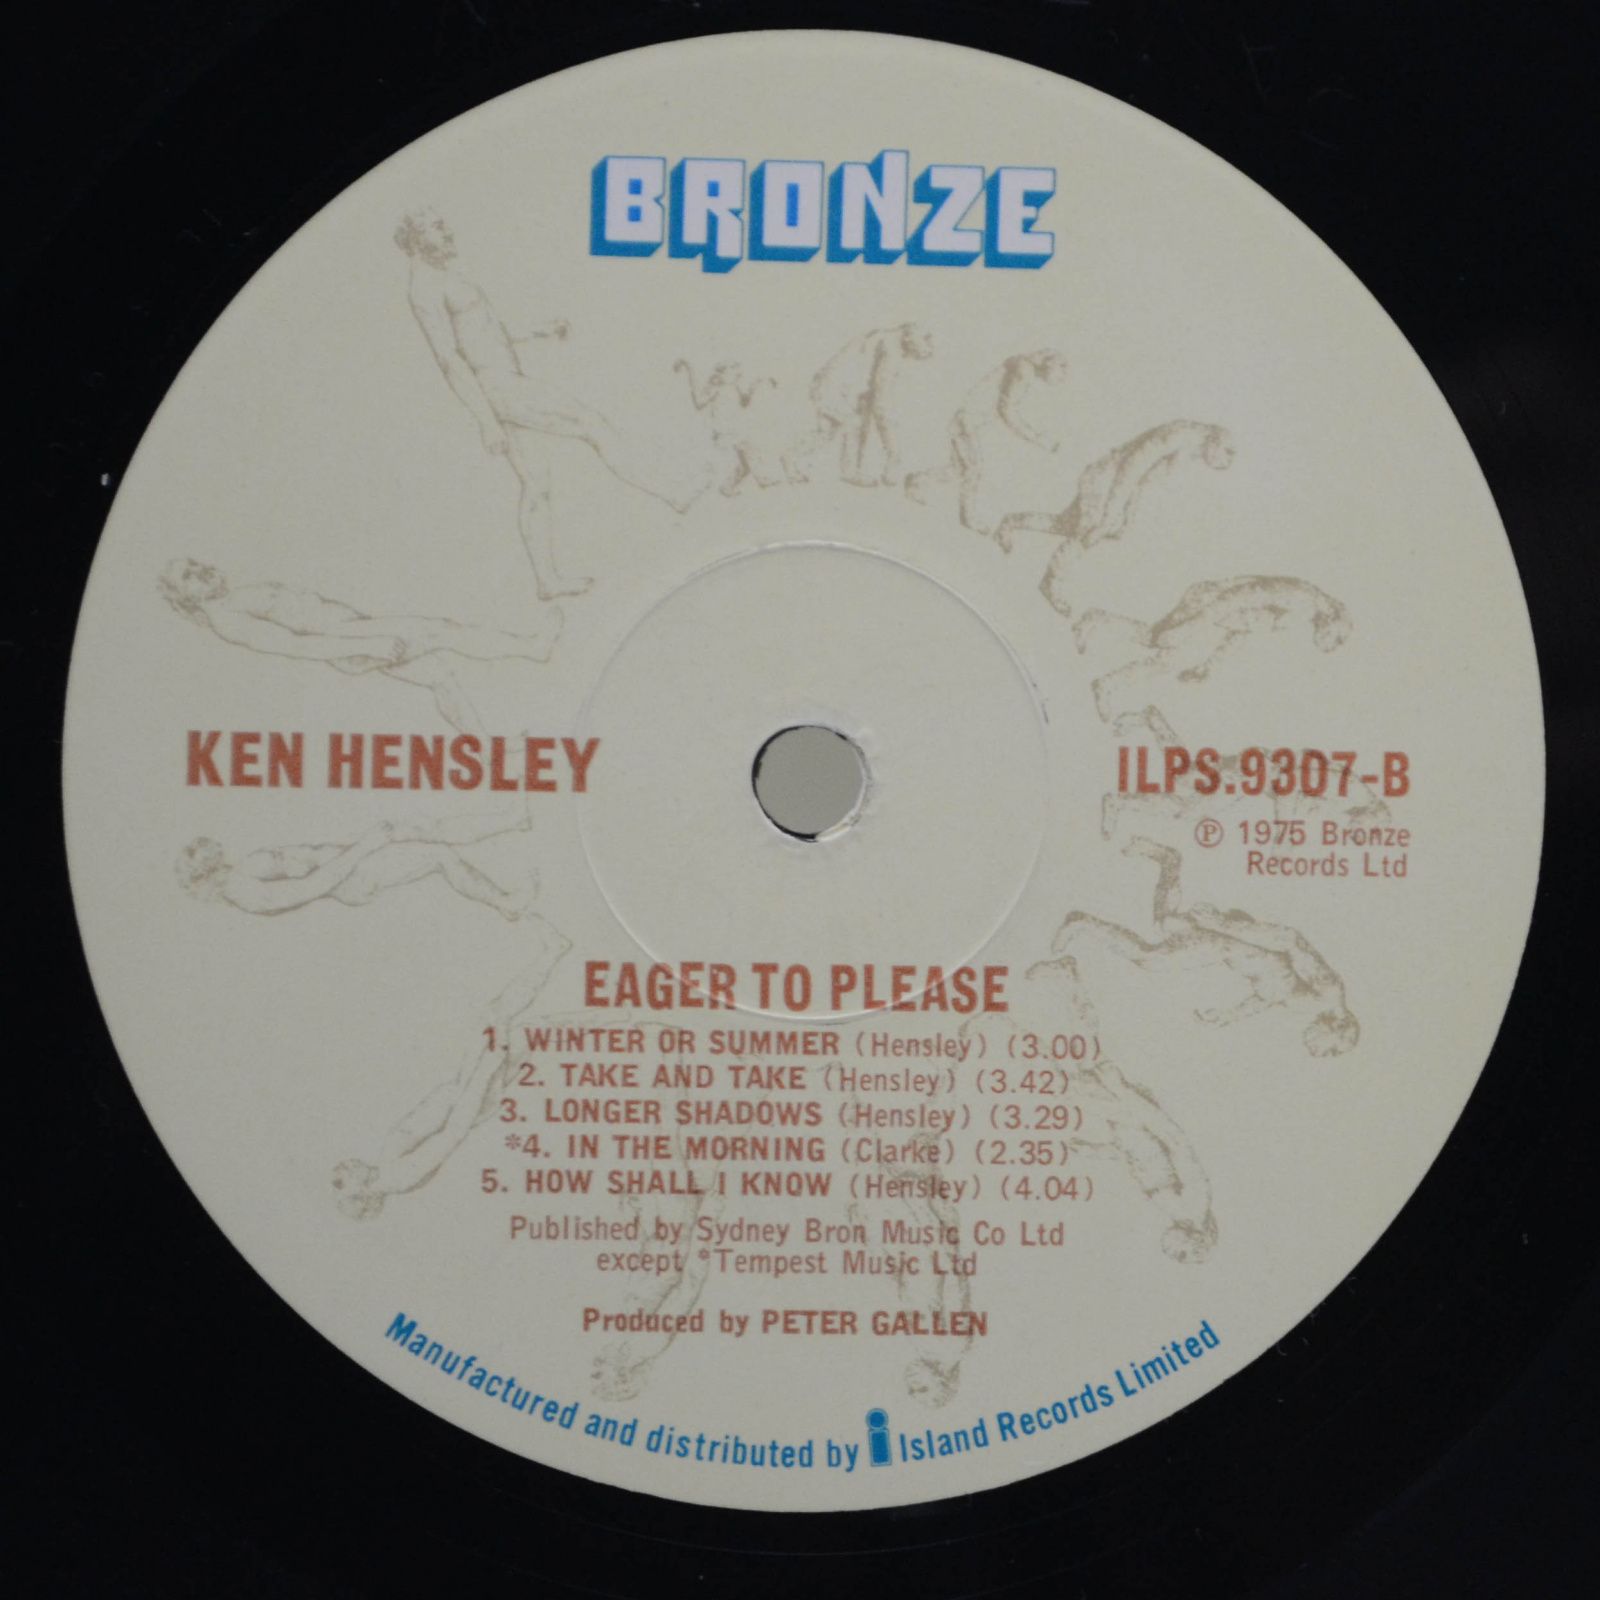 Ken Hensley — Eager To Please (1-st, UK), 1975